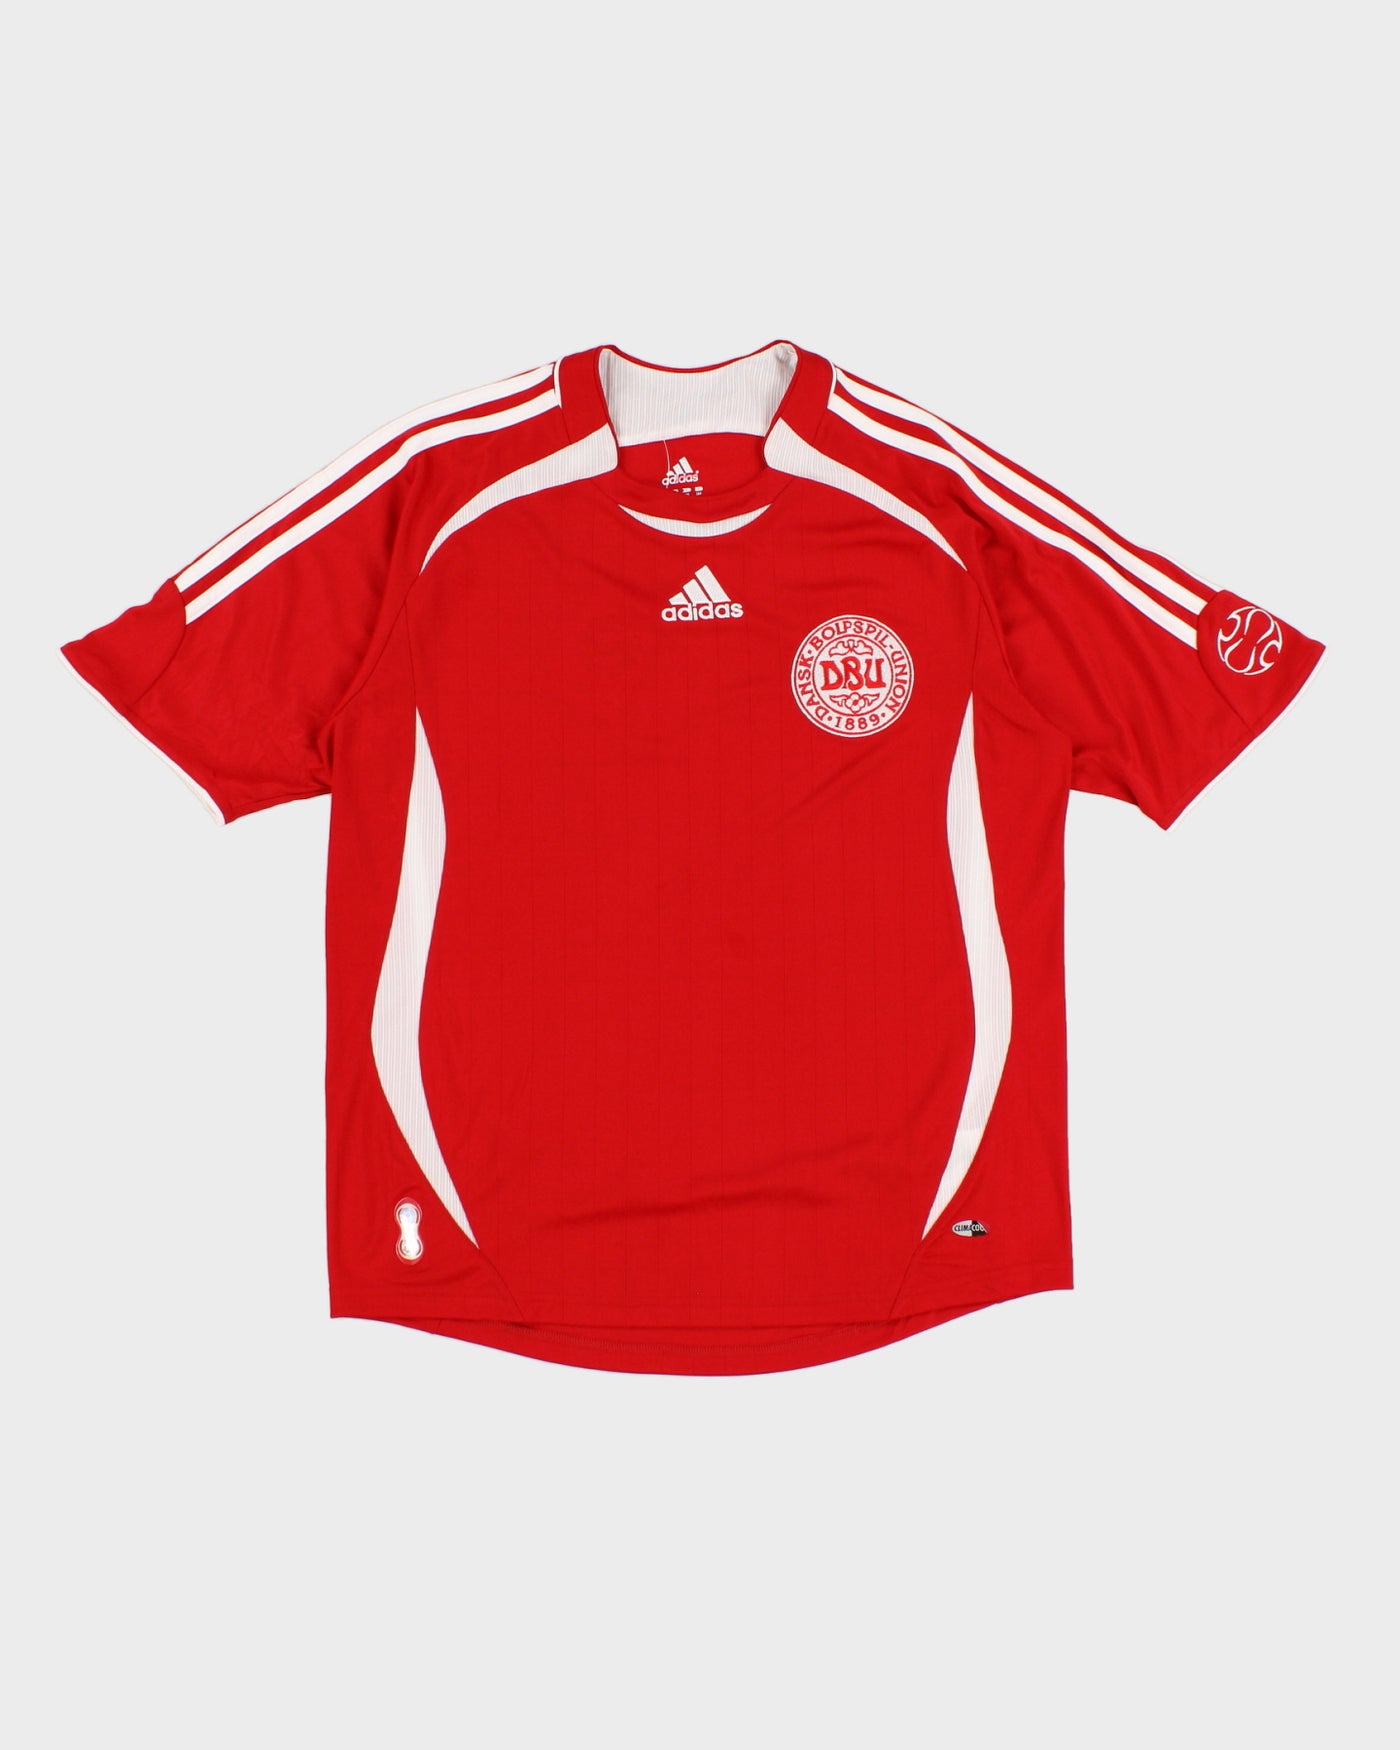 00s Adidas Denmark Football Shirt - Youth L